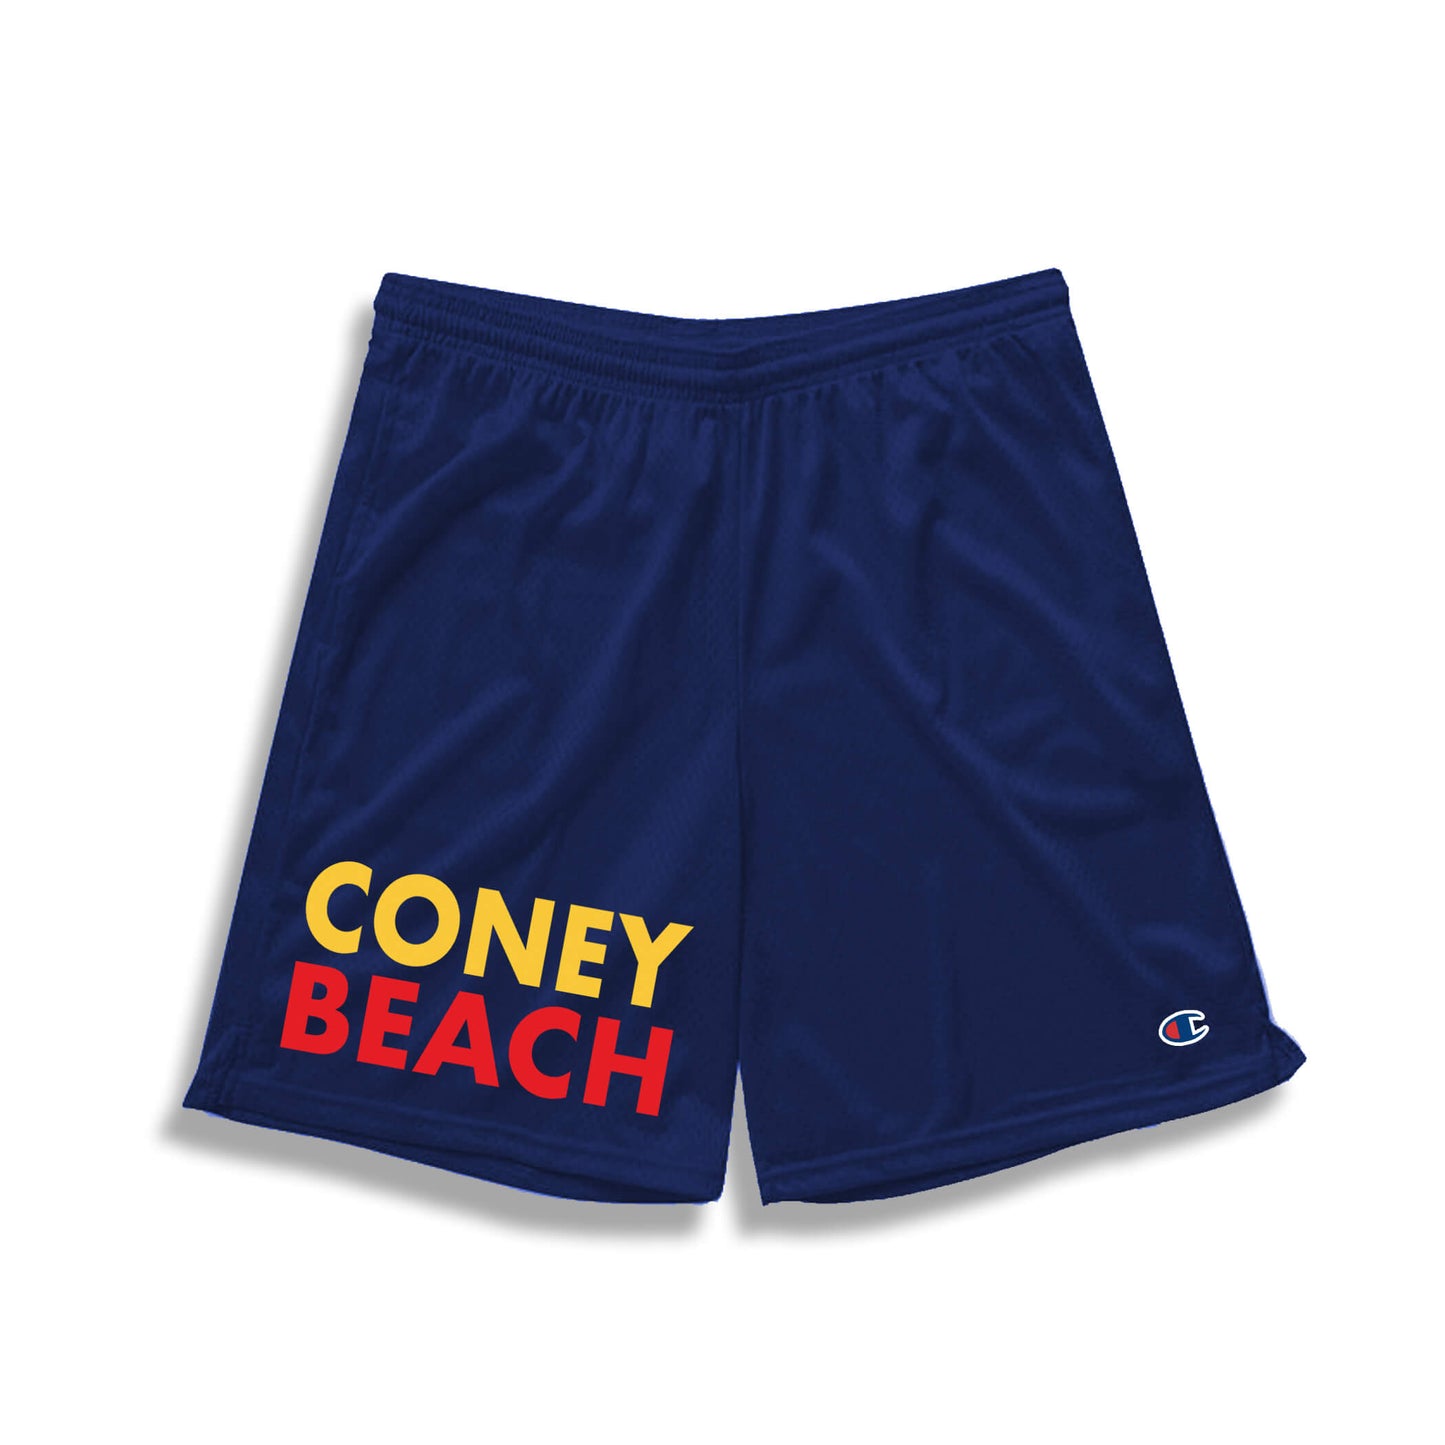 CONEY BEACH SHORTS